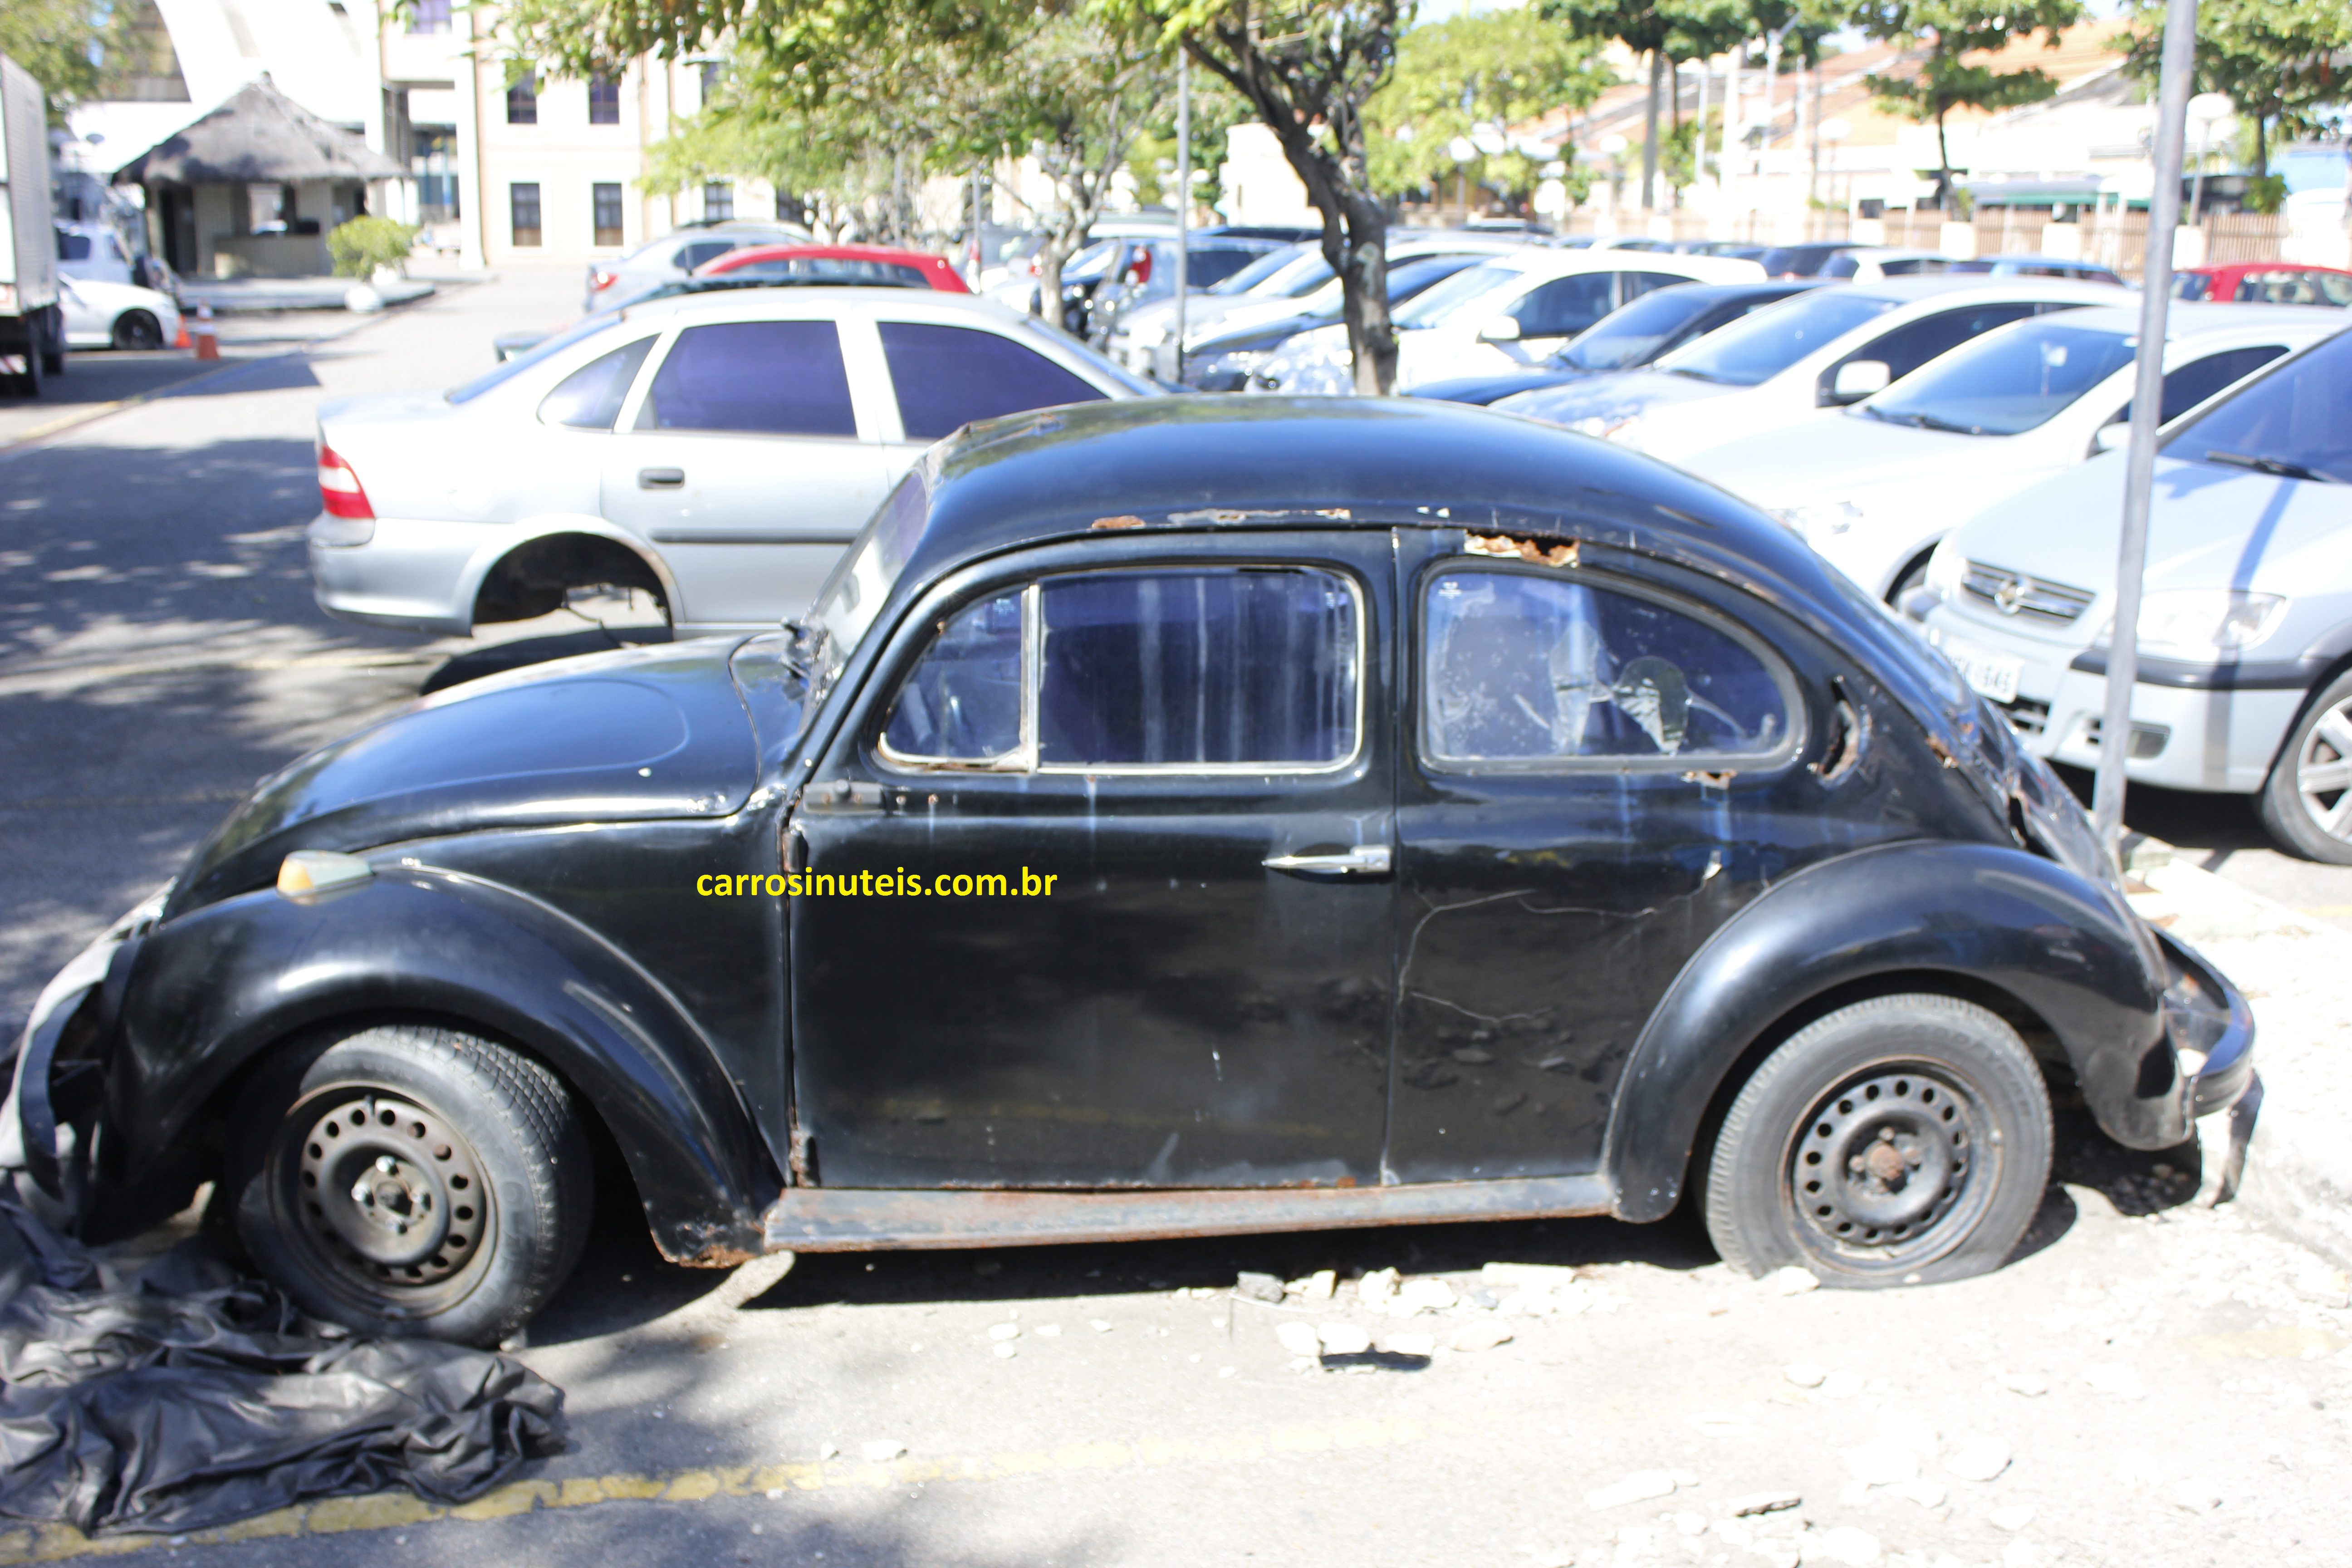 VW Fusca. Davison Gomes – Recife/PE